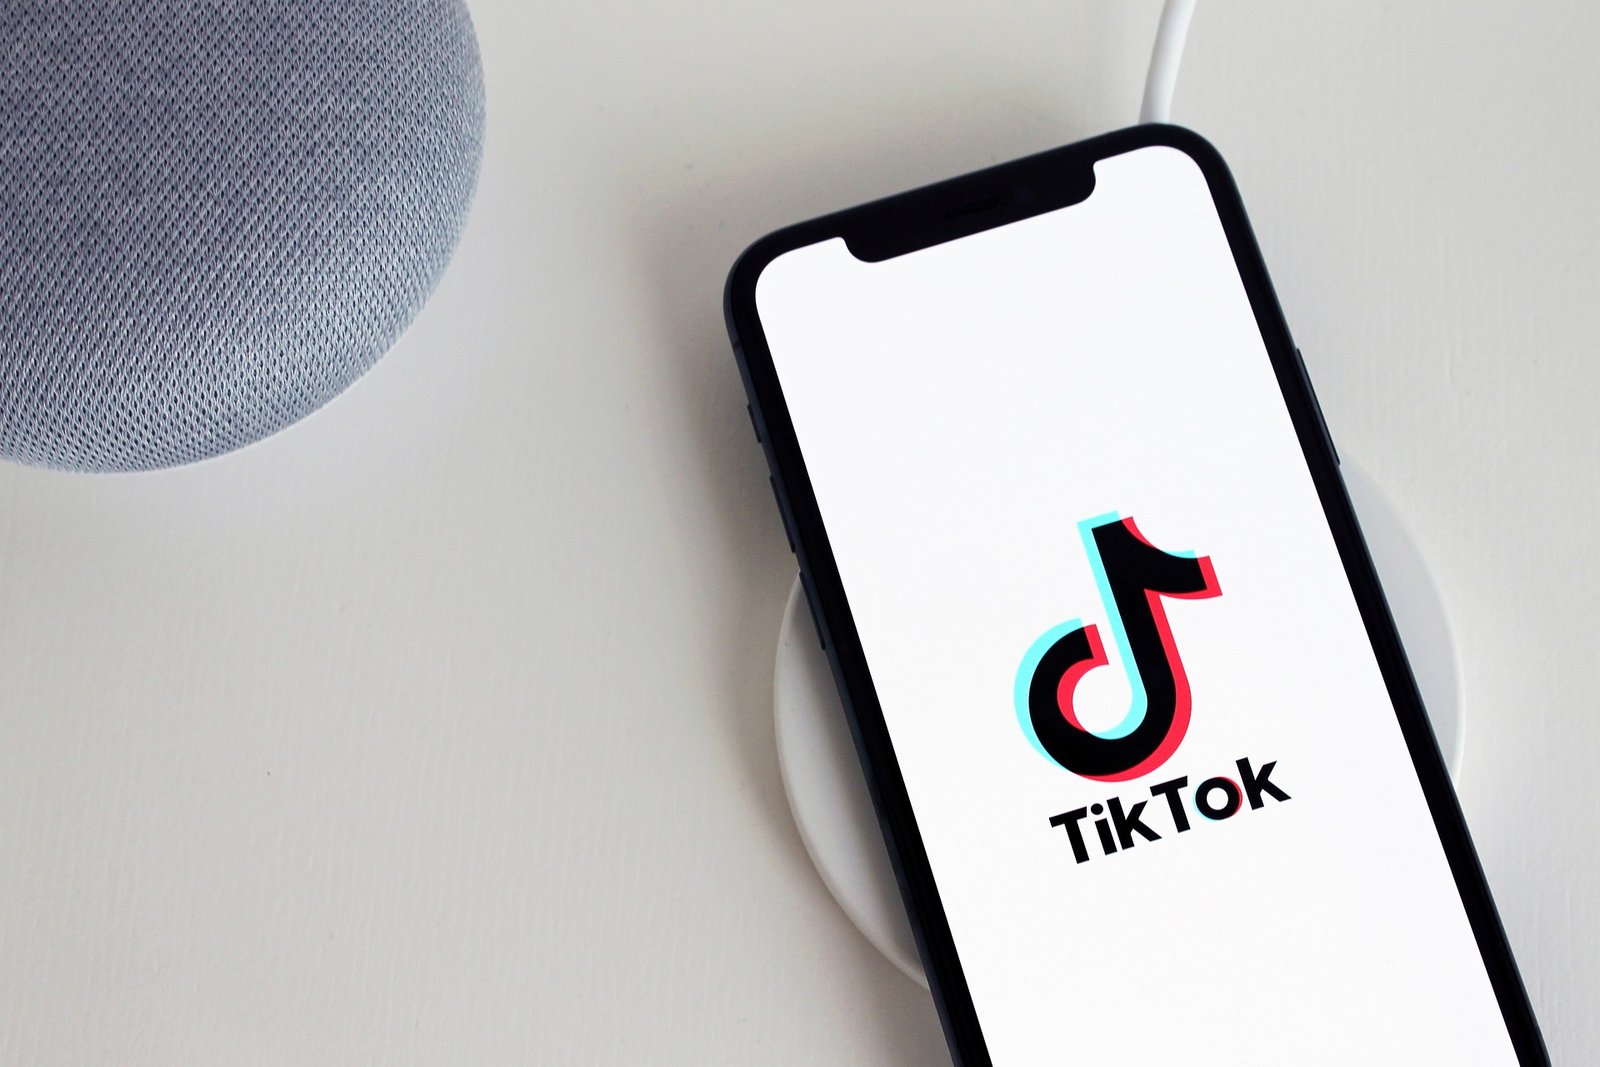 TikTok may split from ByteDance if US deal stalls